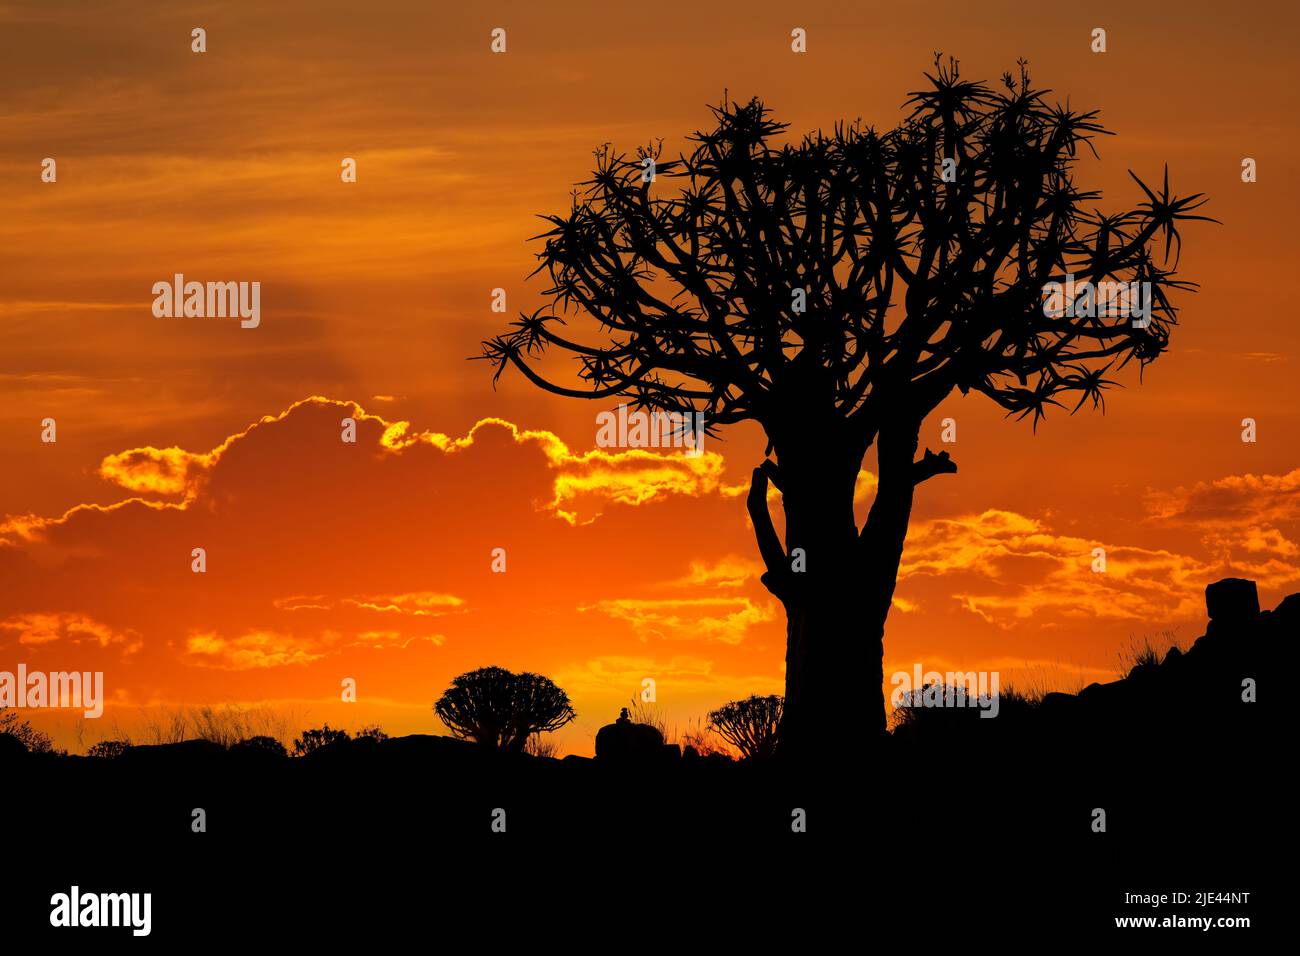 Silhouette eines Köcherbaums (Aloe dichotoma) bei Sonnenuntergang, Namibia Stockfoto